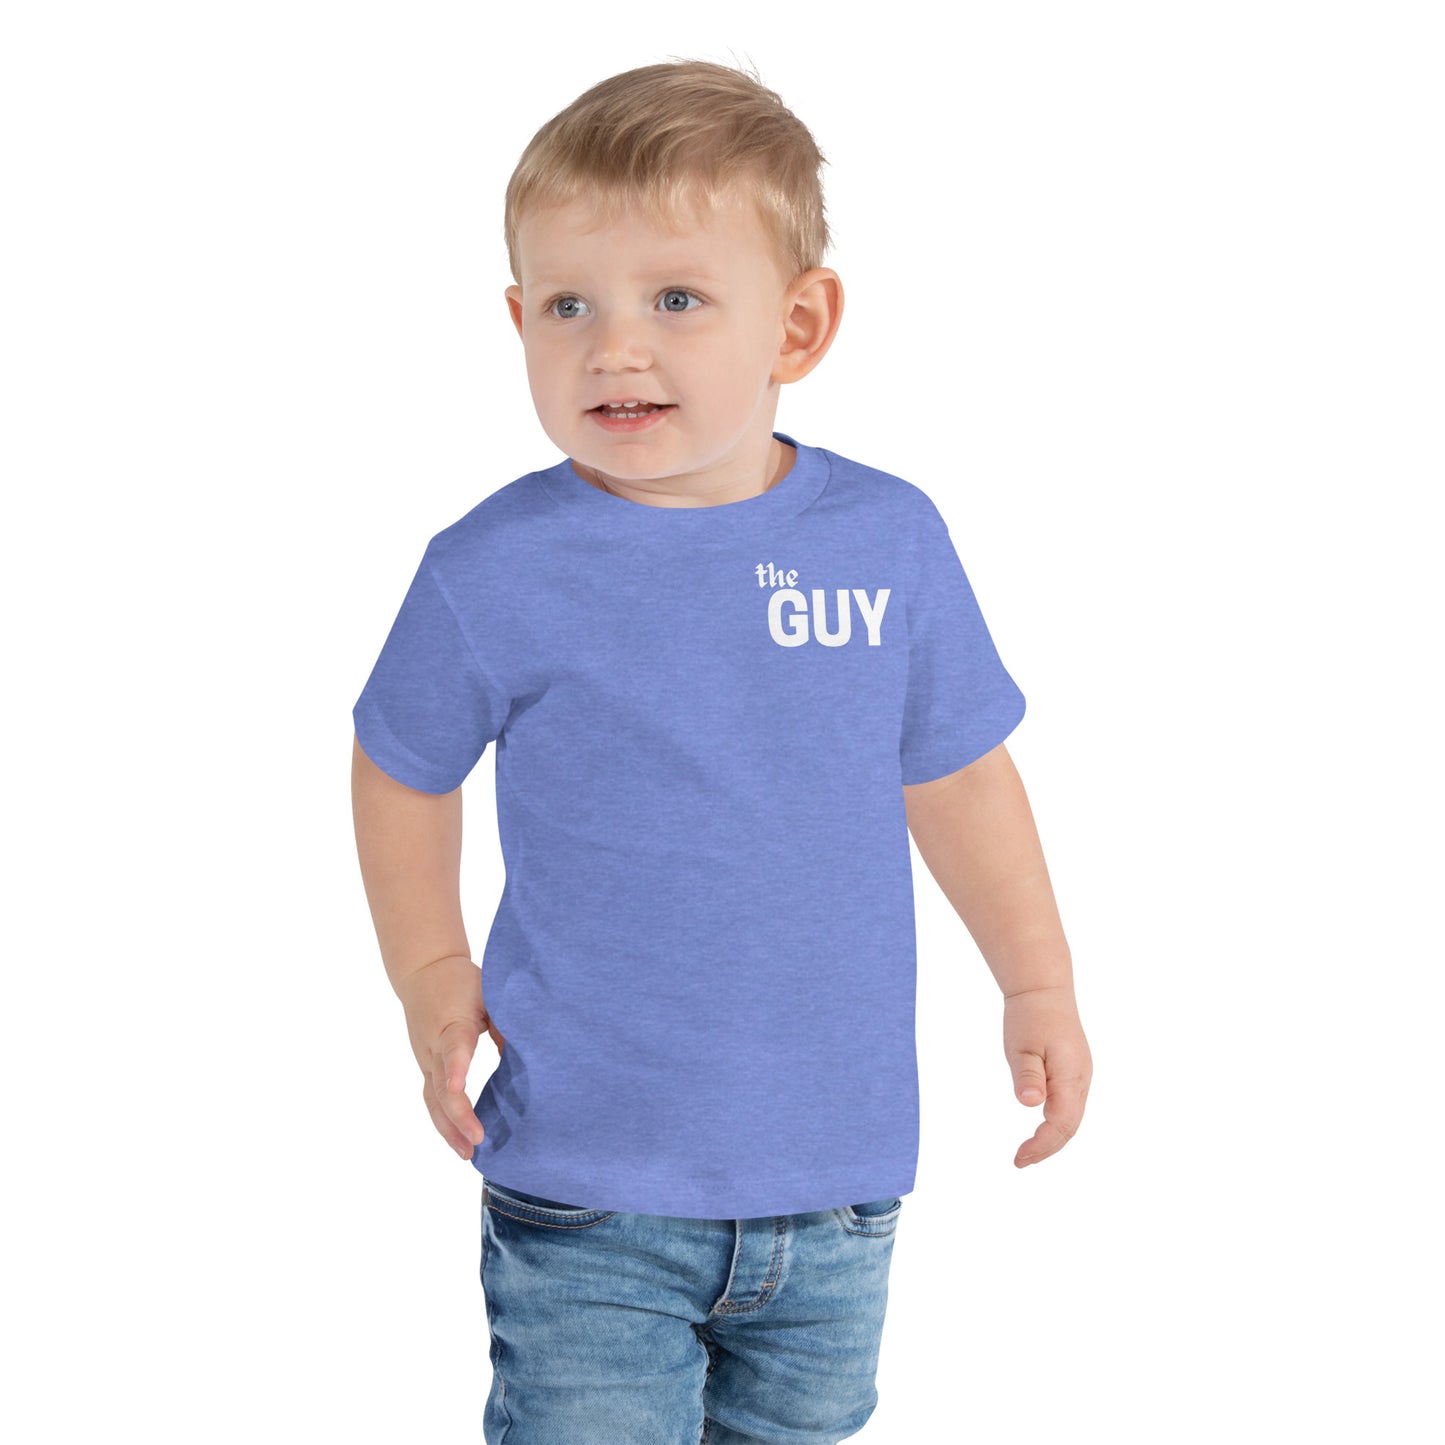 The Guy - Toddler Short Sleeve Tee